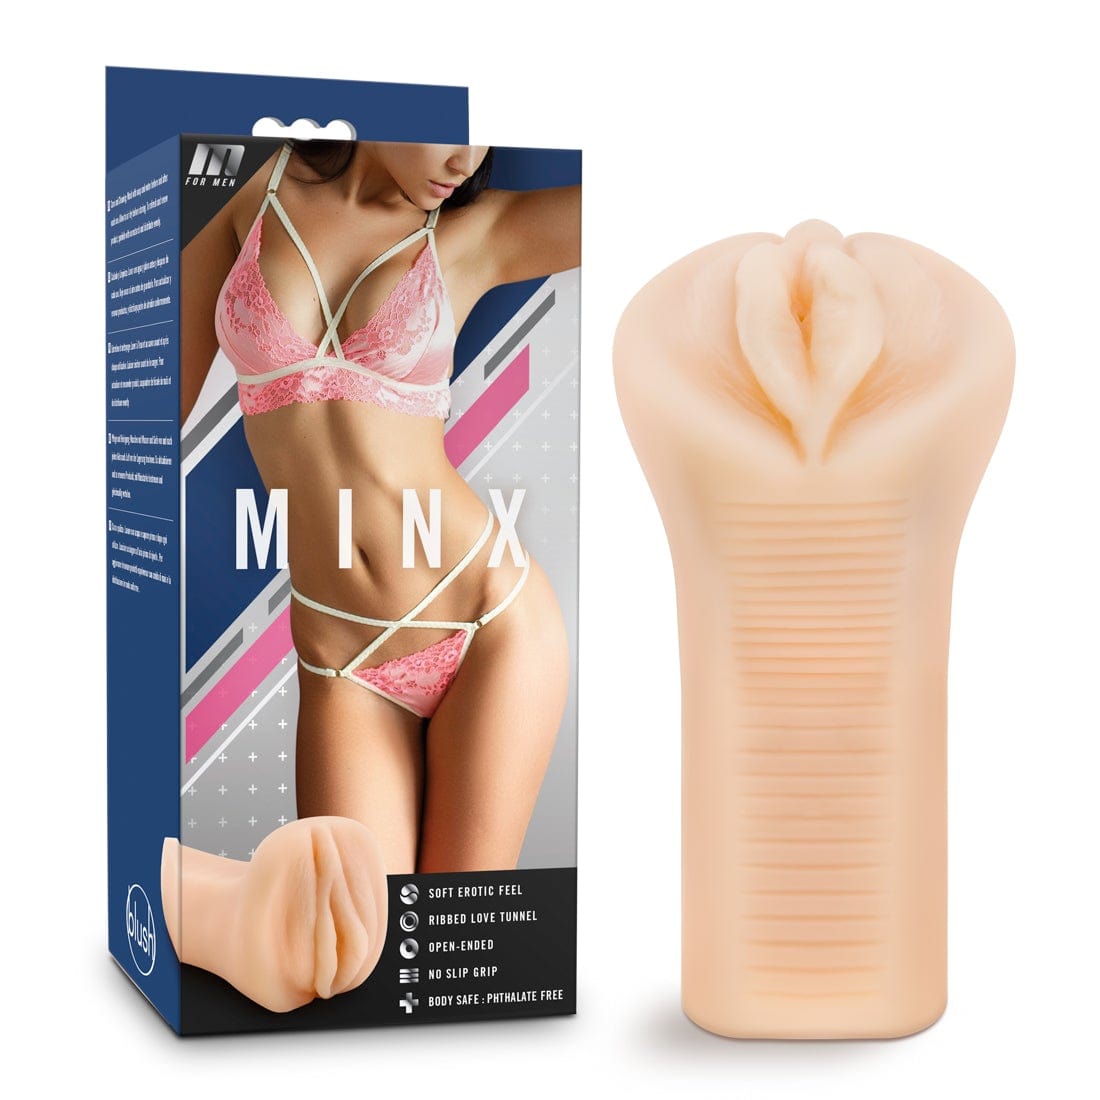 Minx Pocket Pussy image